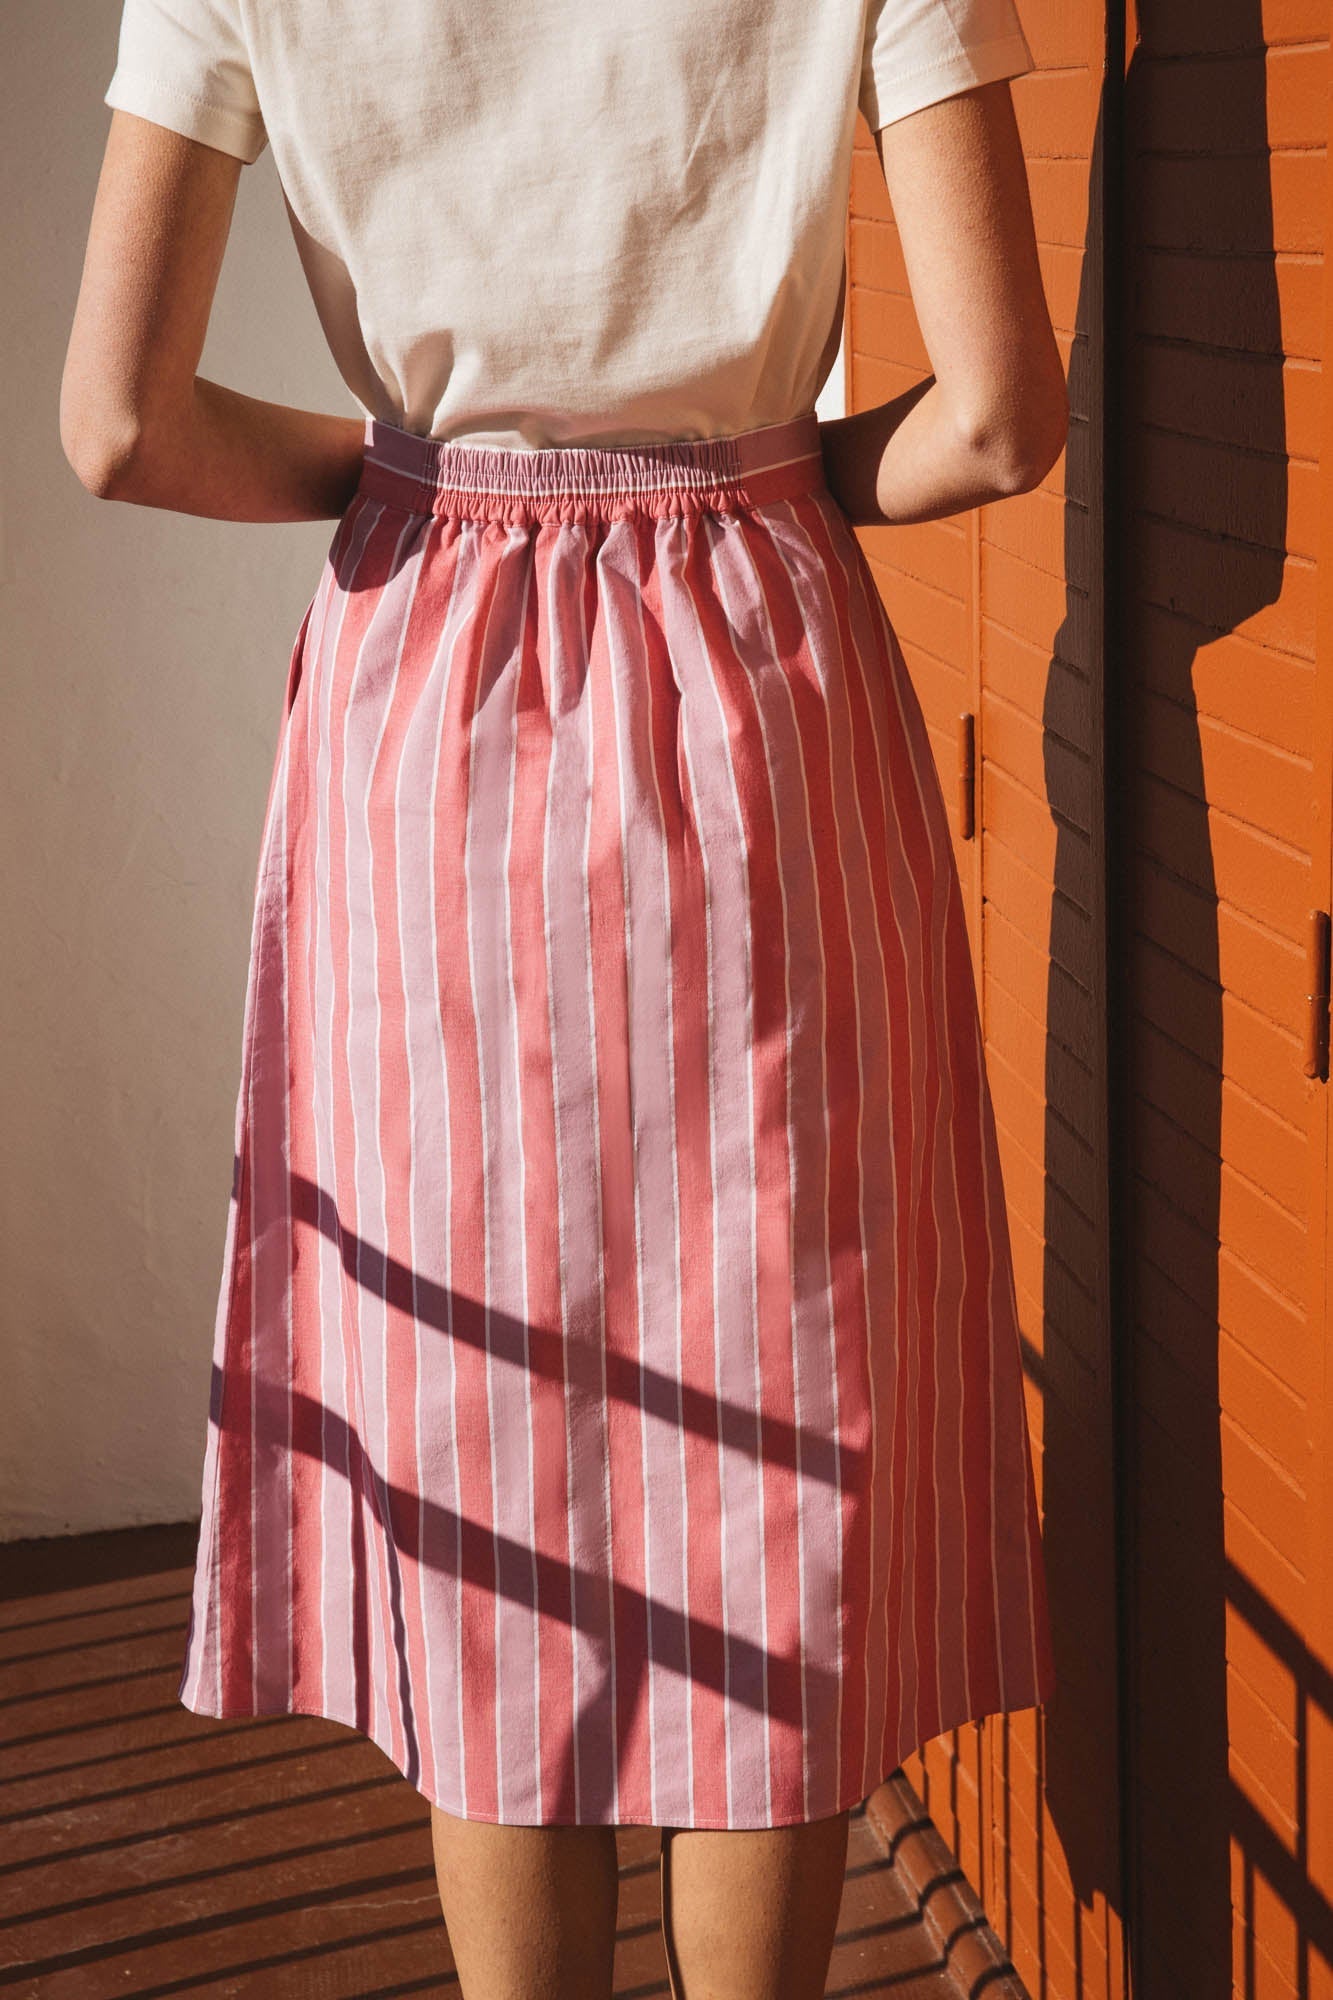 Sally pink striped skirt